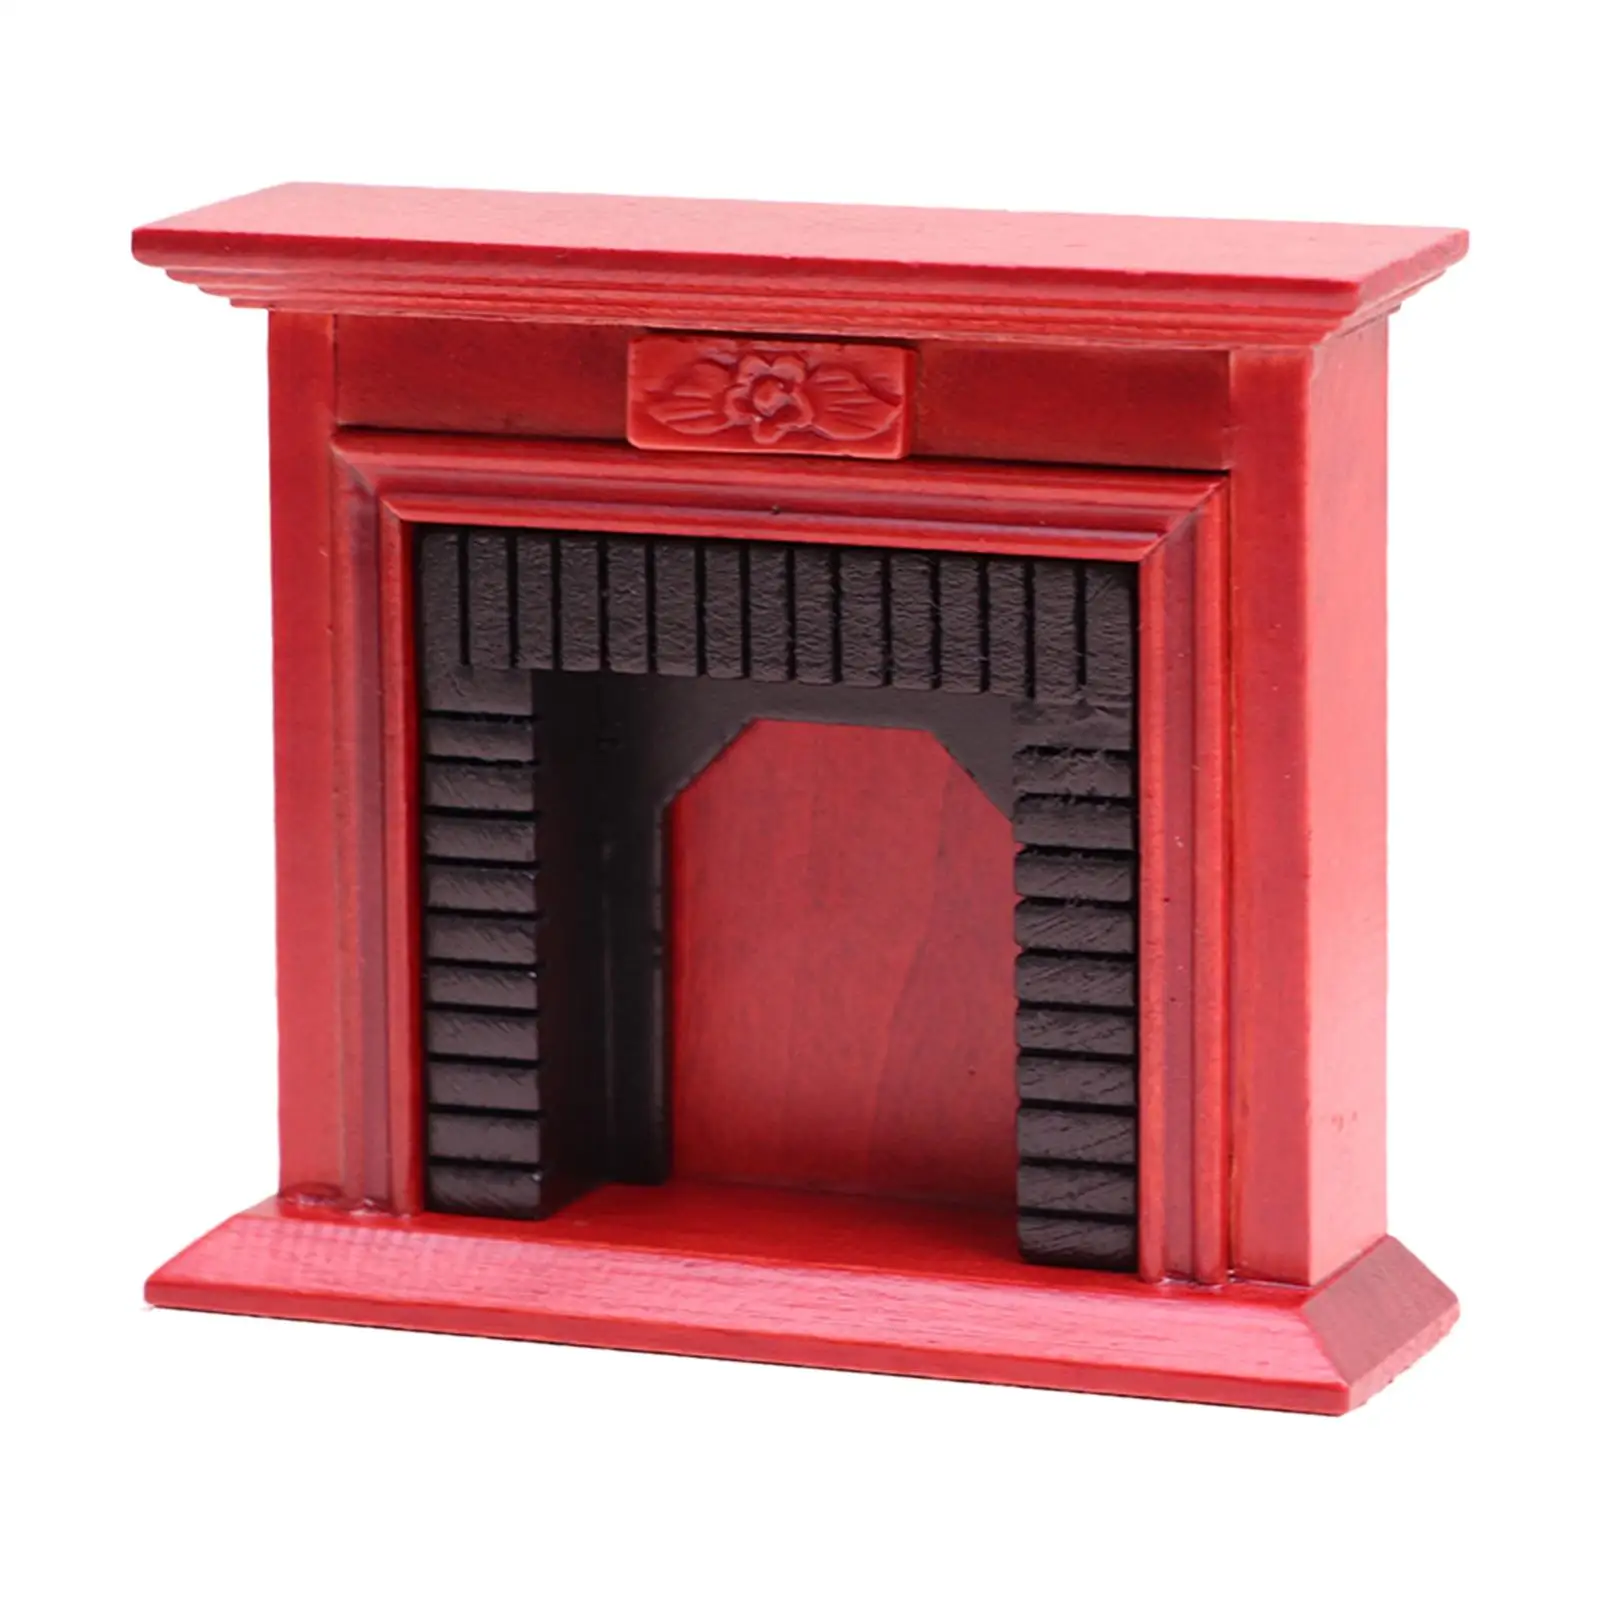 1:12 Fireplace ,DIY Scene Accessories Wooden Miniature Dollhouse Decoration